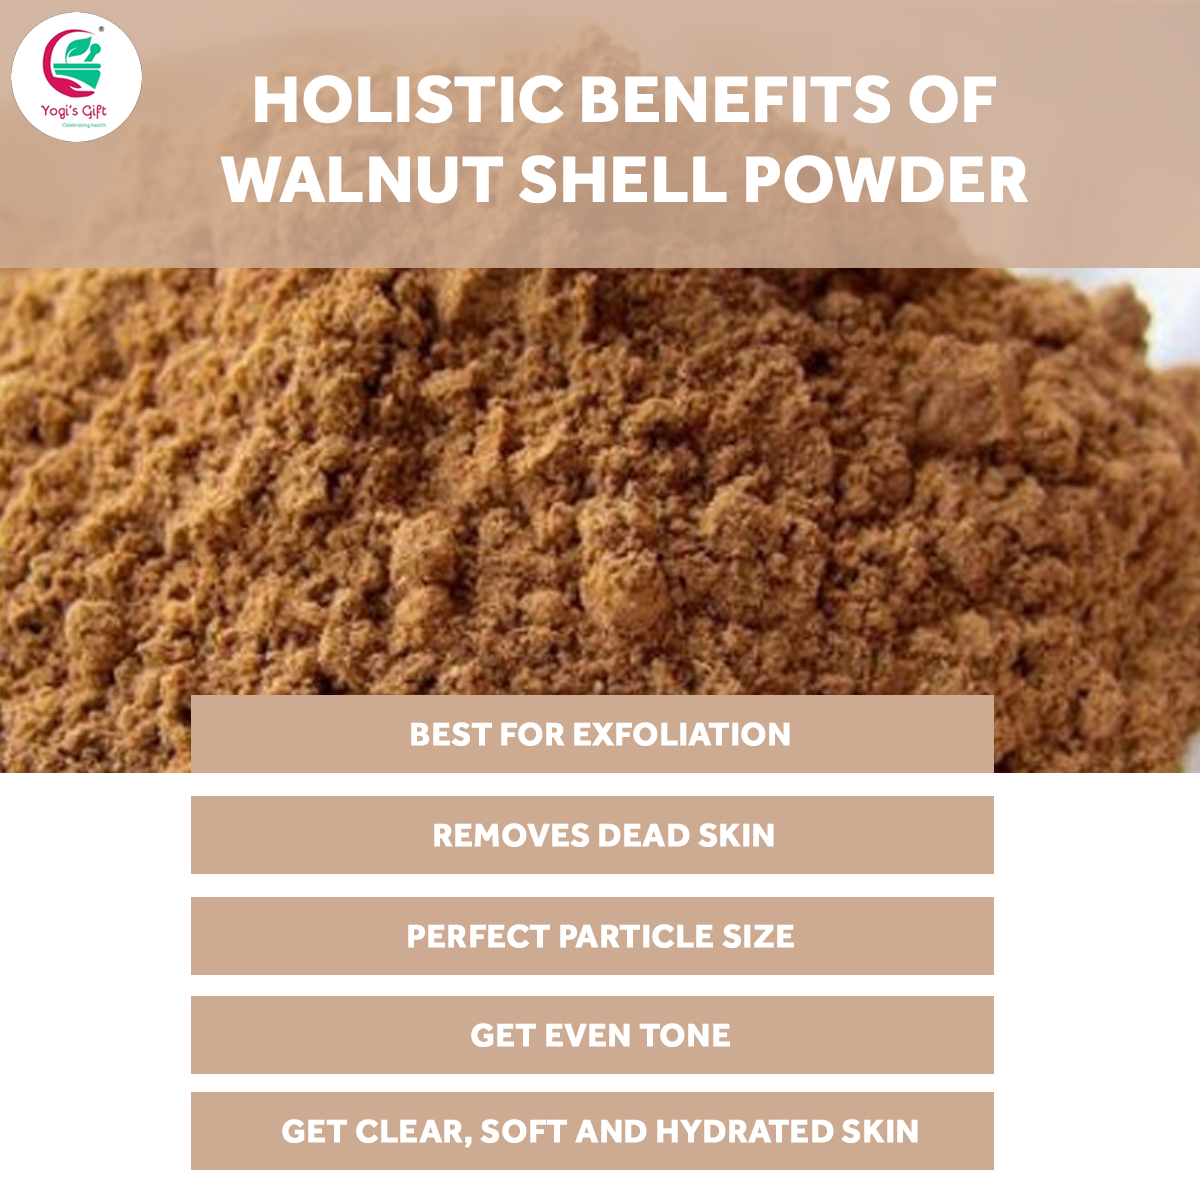 Ground Walnut Shells  8 oz / Walnut Shell Powder  | Great for Face Scrub | Natural Exfoliant for Soap Making | Yogi's Gift®